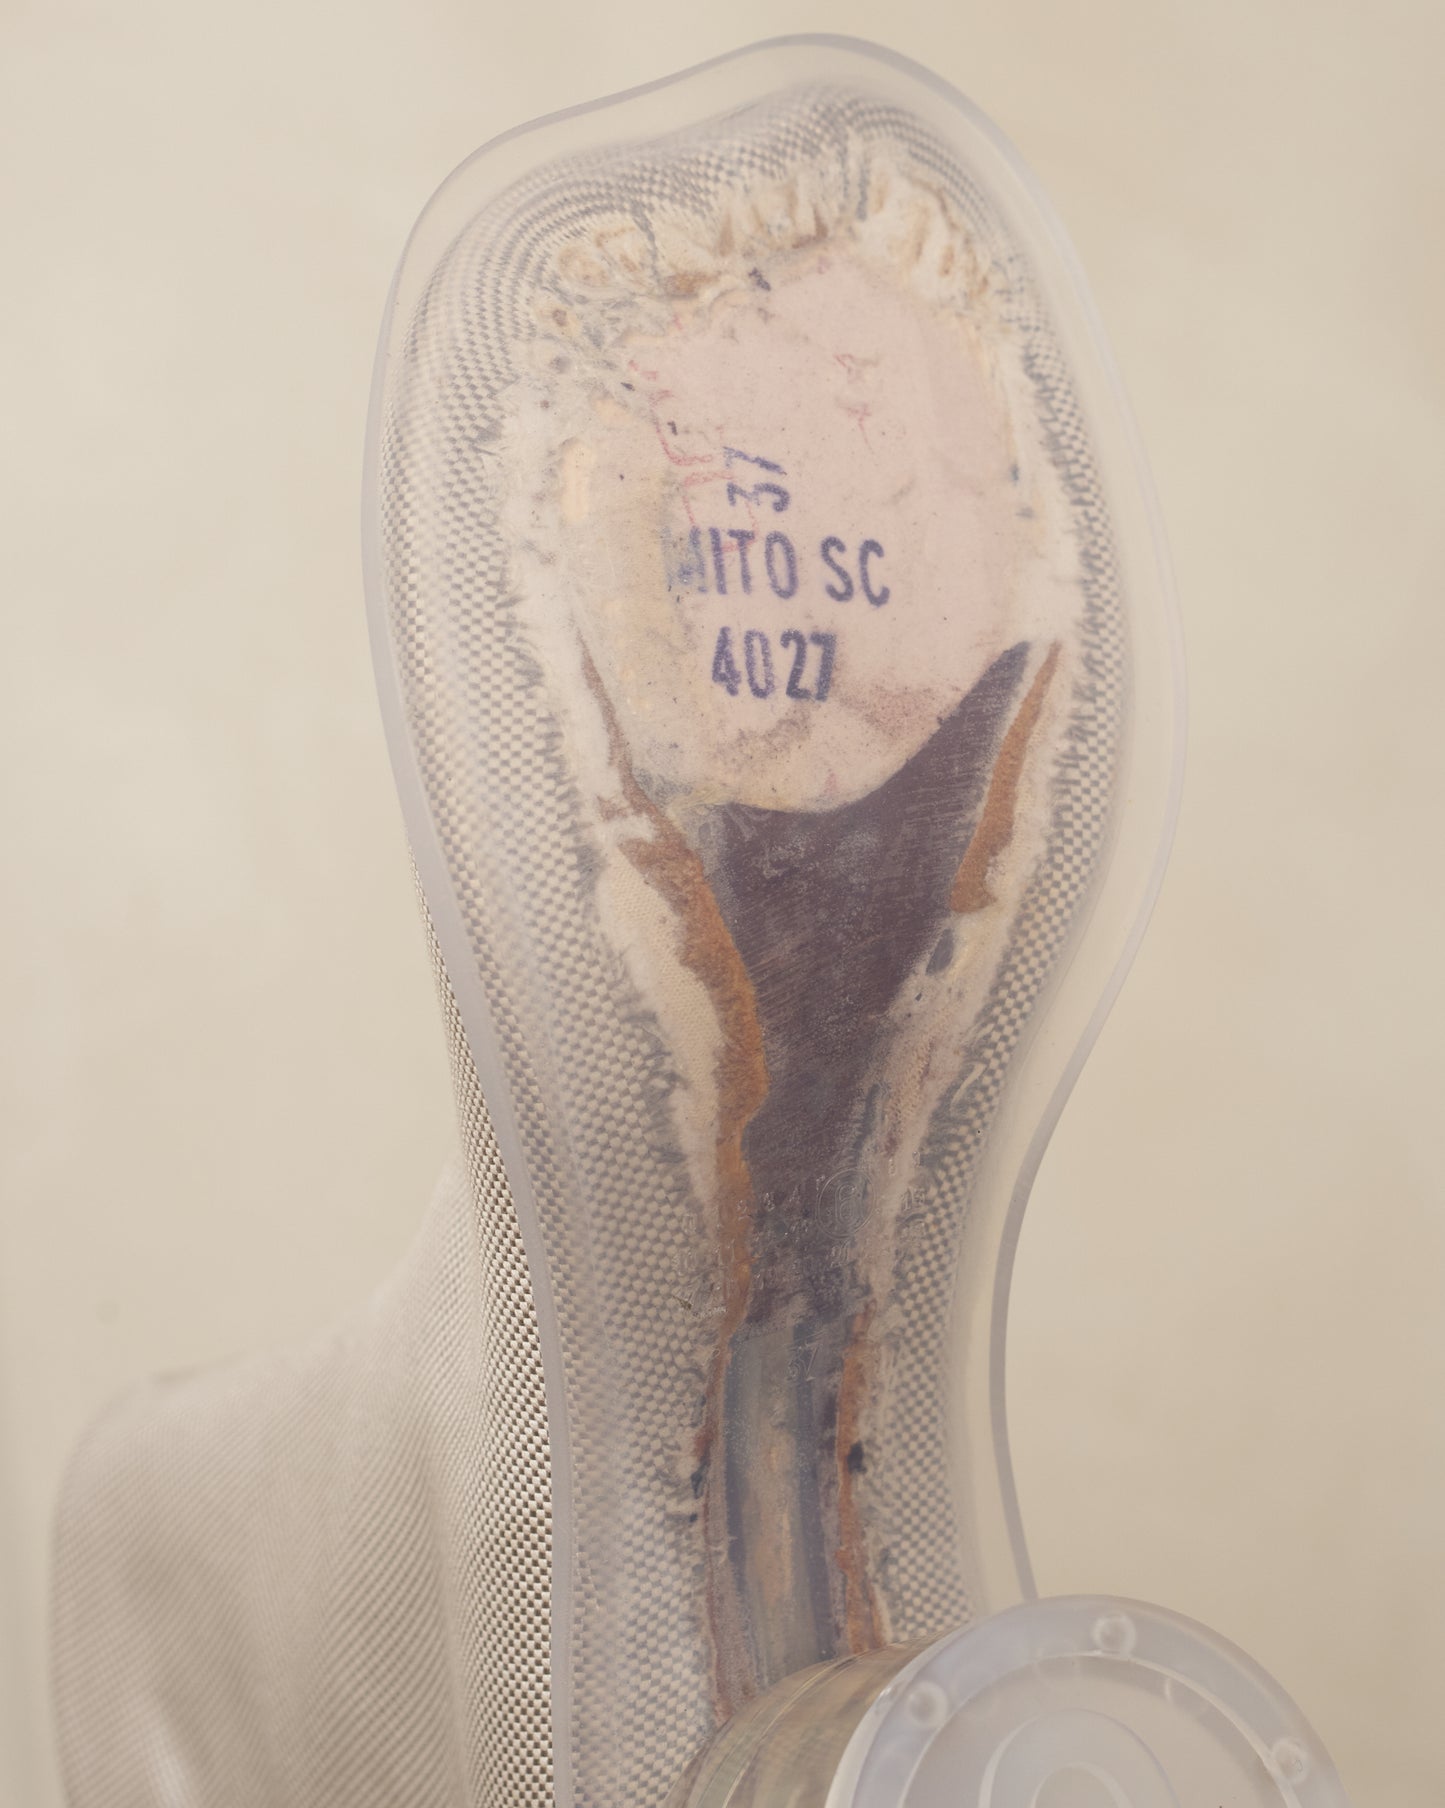 Grout Anatomic Transparent Heel Boots